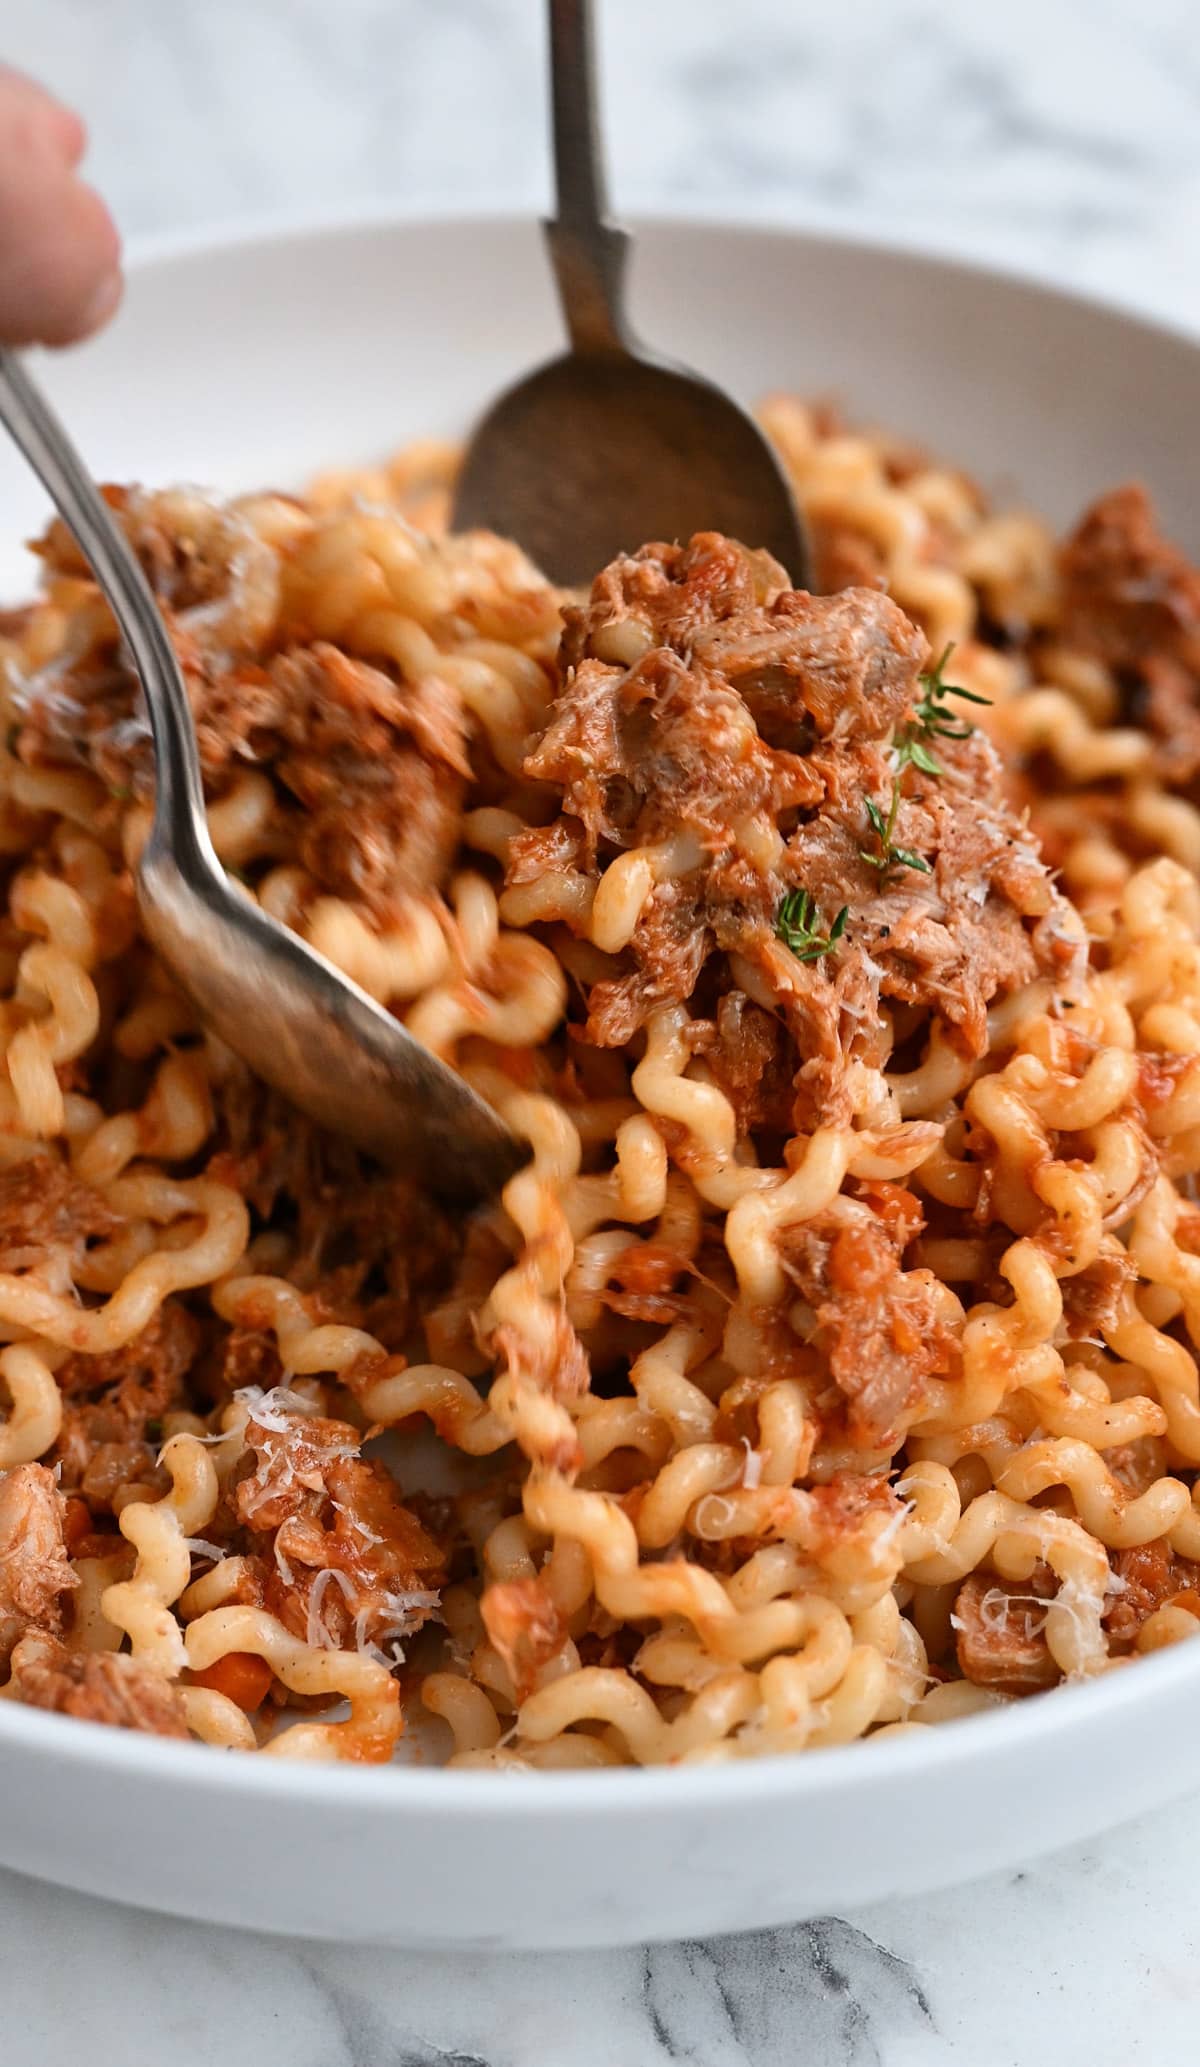 Two spoons lifting pasta with pork ragu sauce